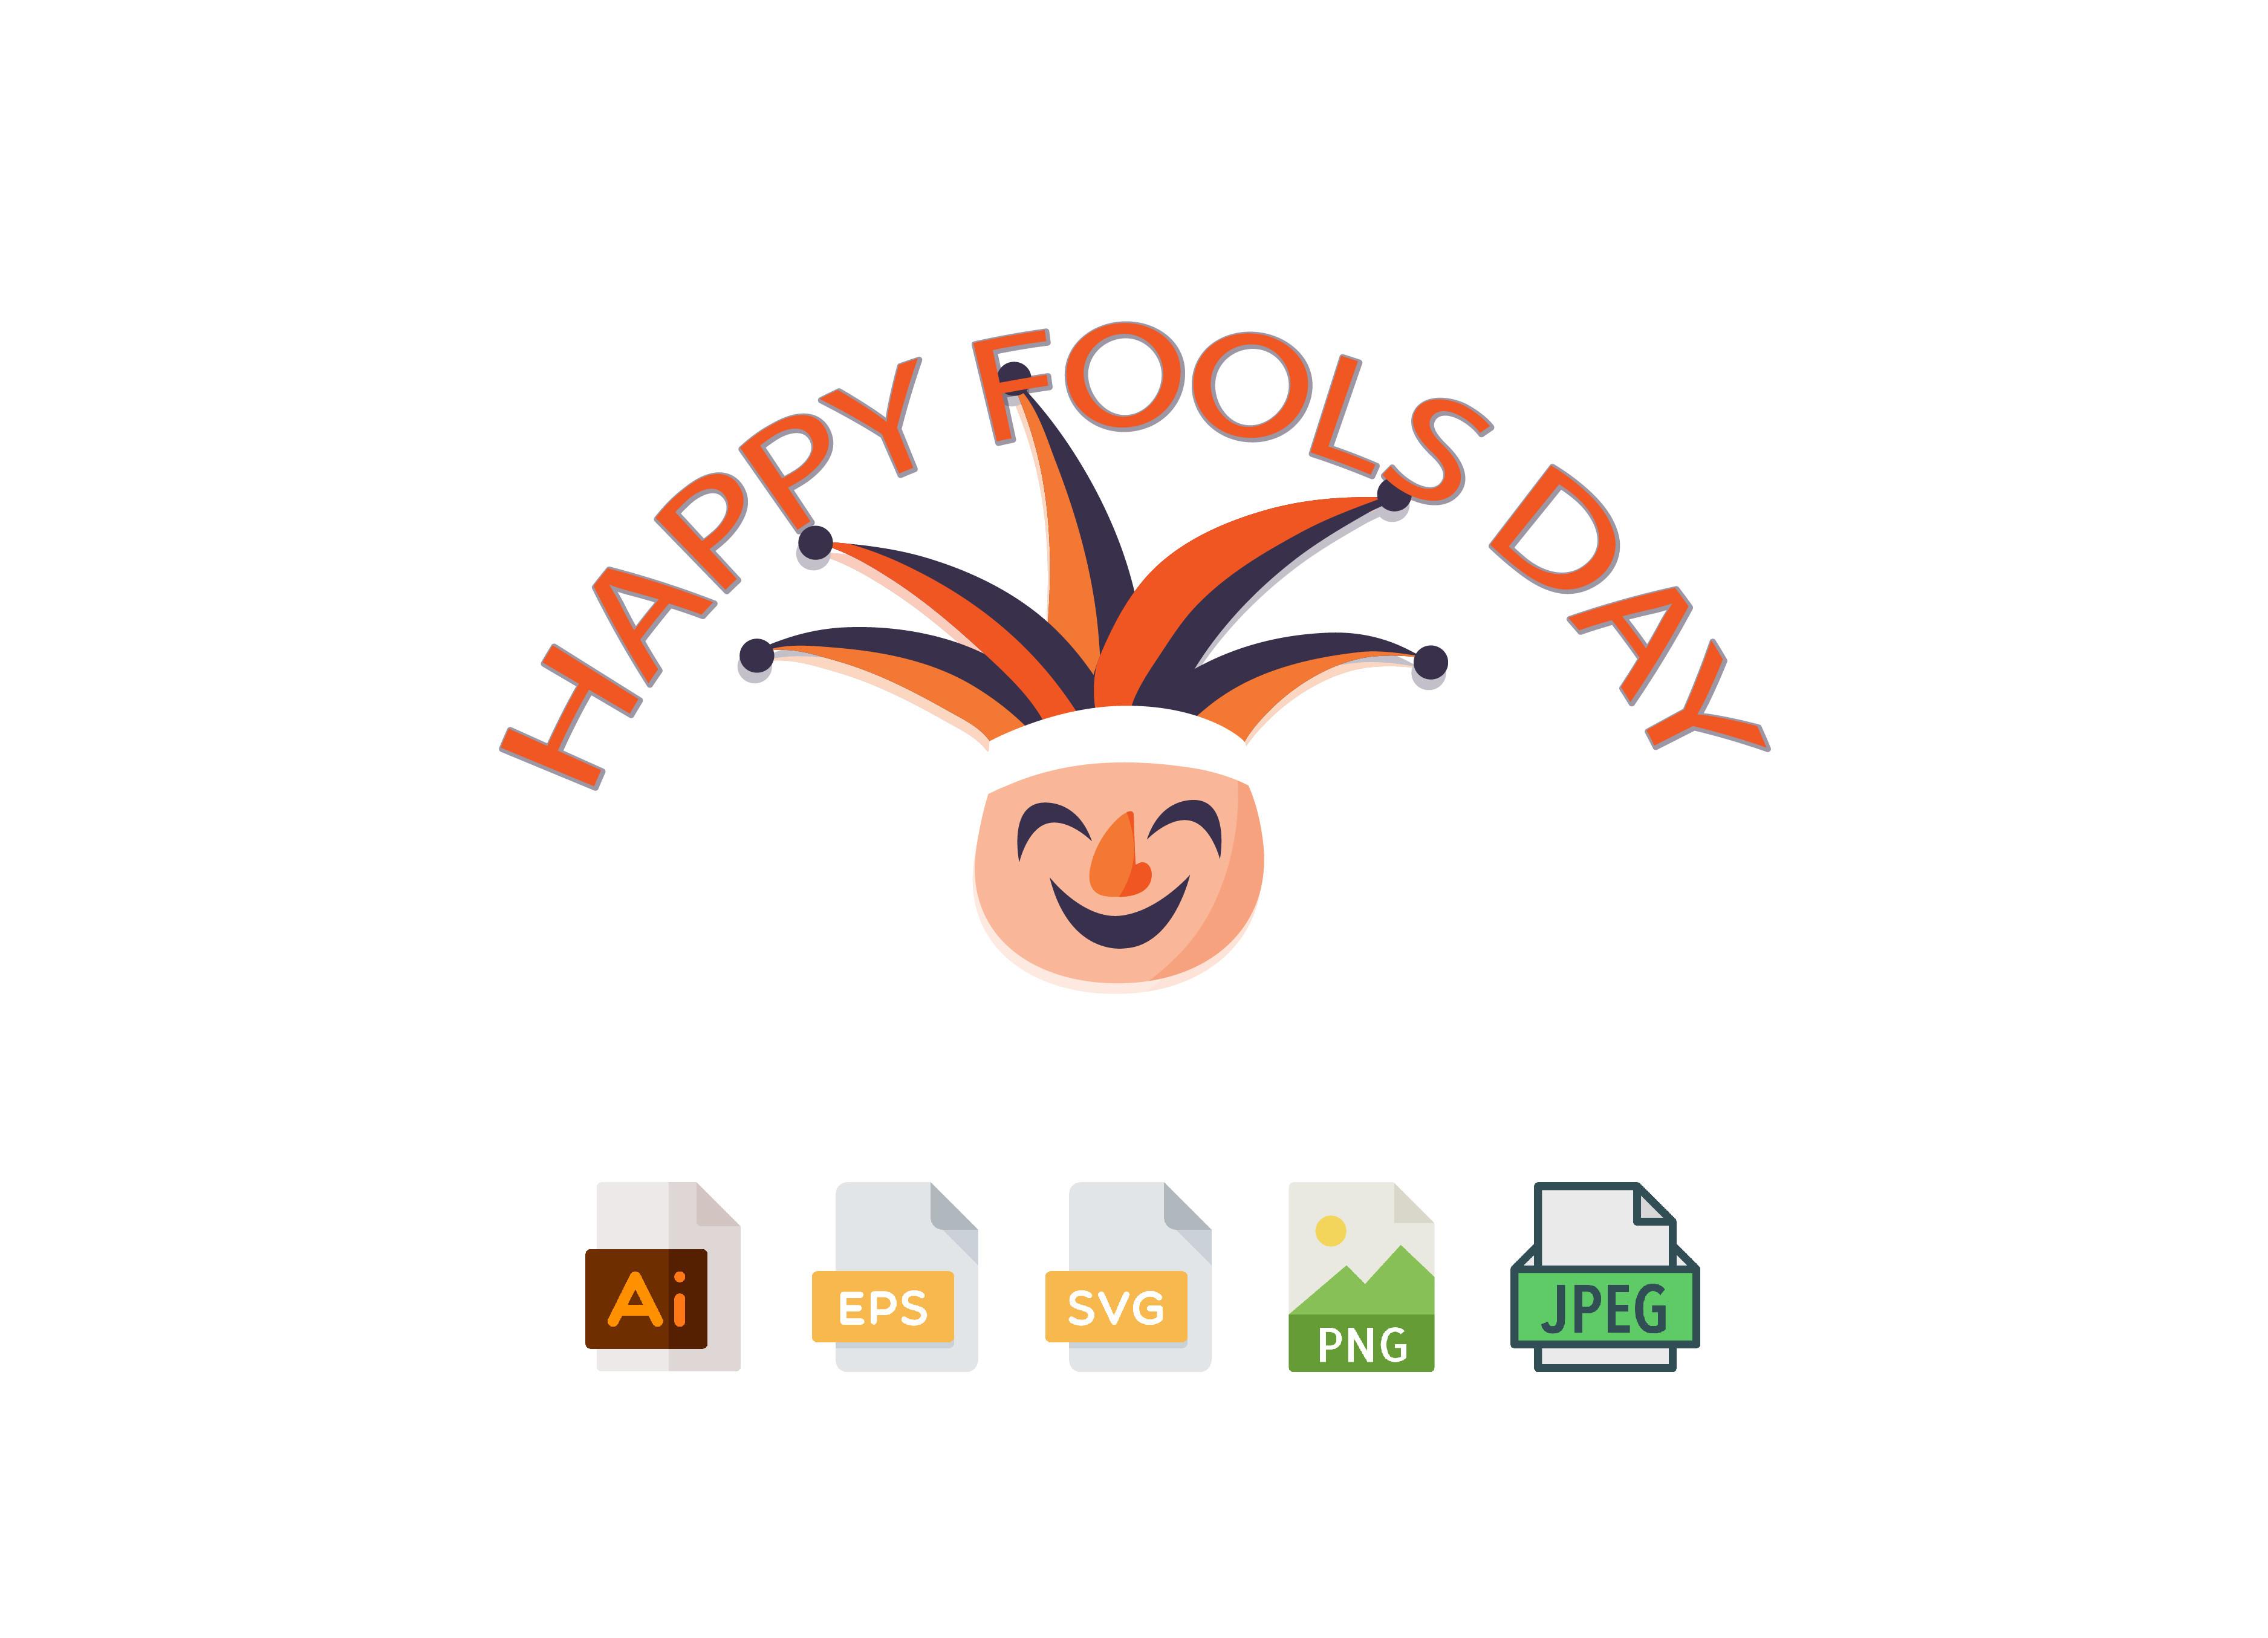 April Fools Day Design SVG